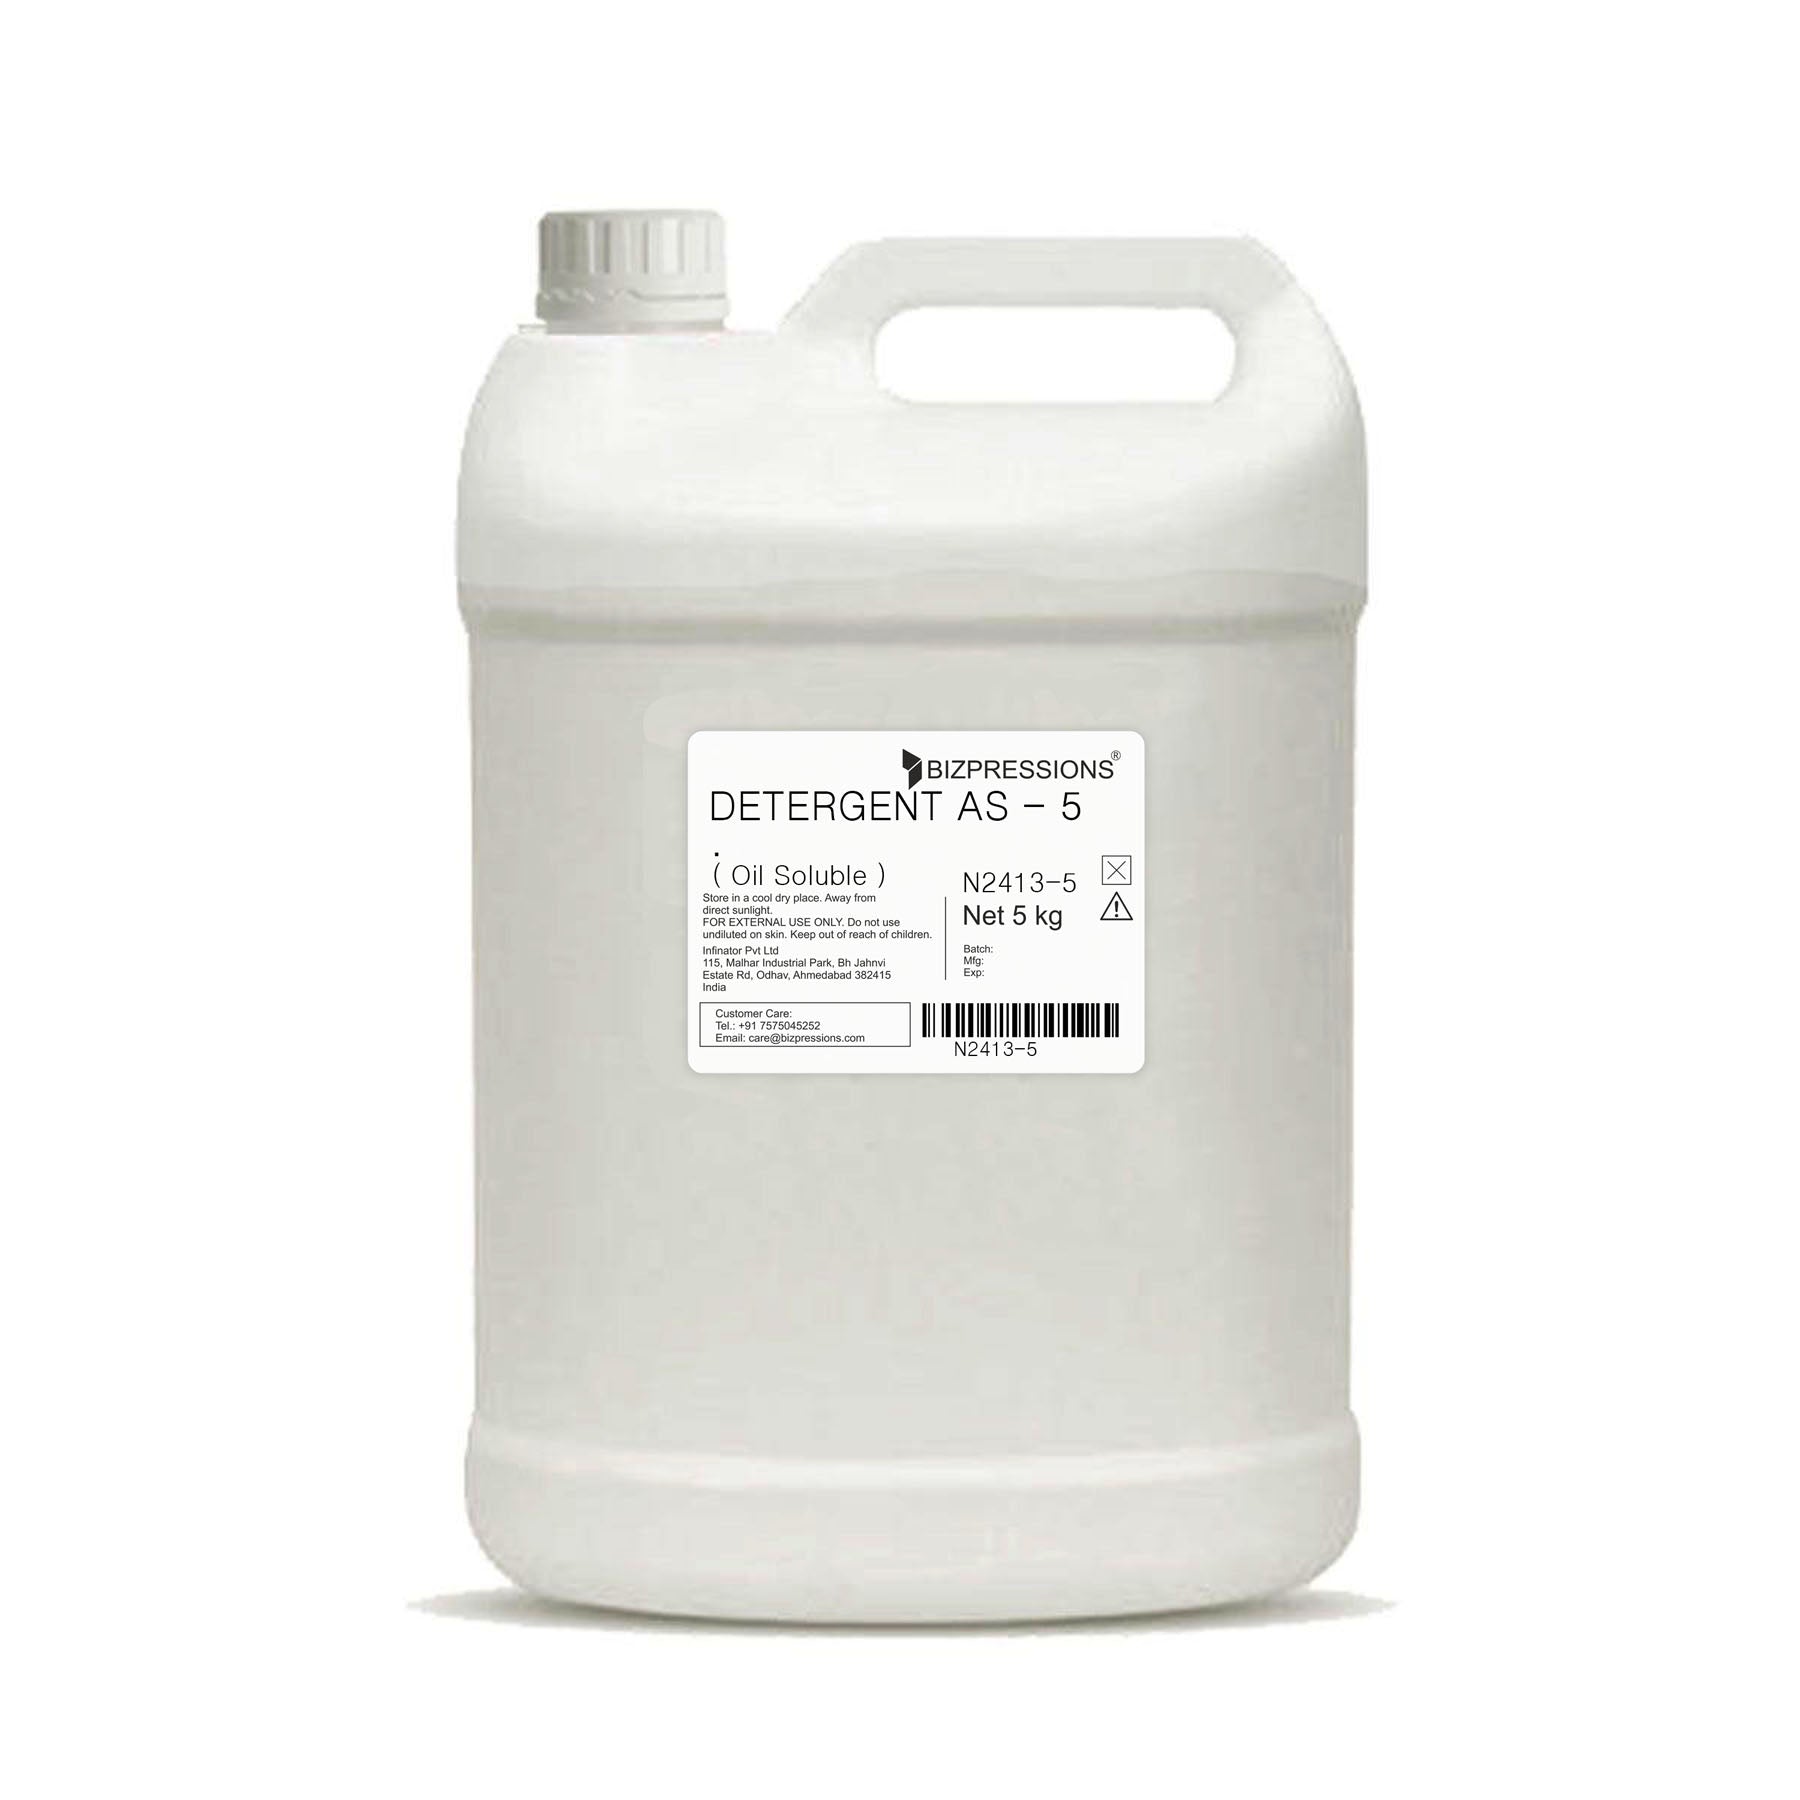 DETERGENT AS - 5 - Fragrance ( Oil Soluble ) - 5 kg